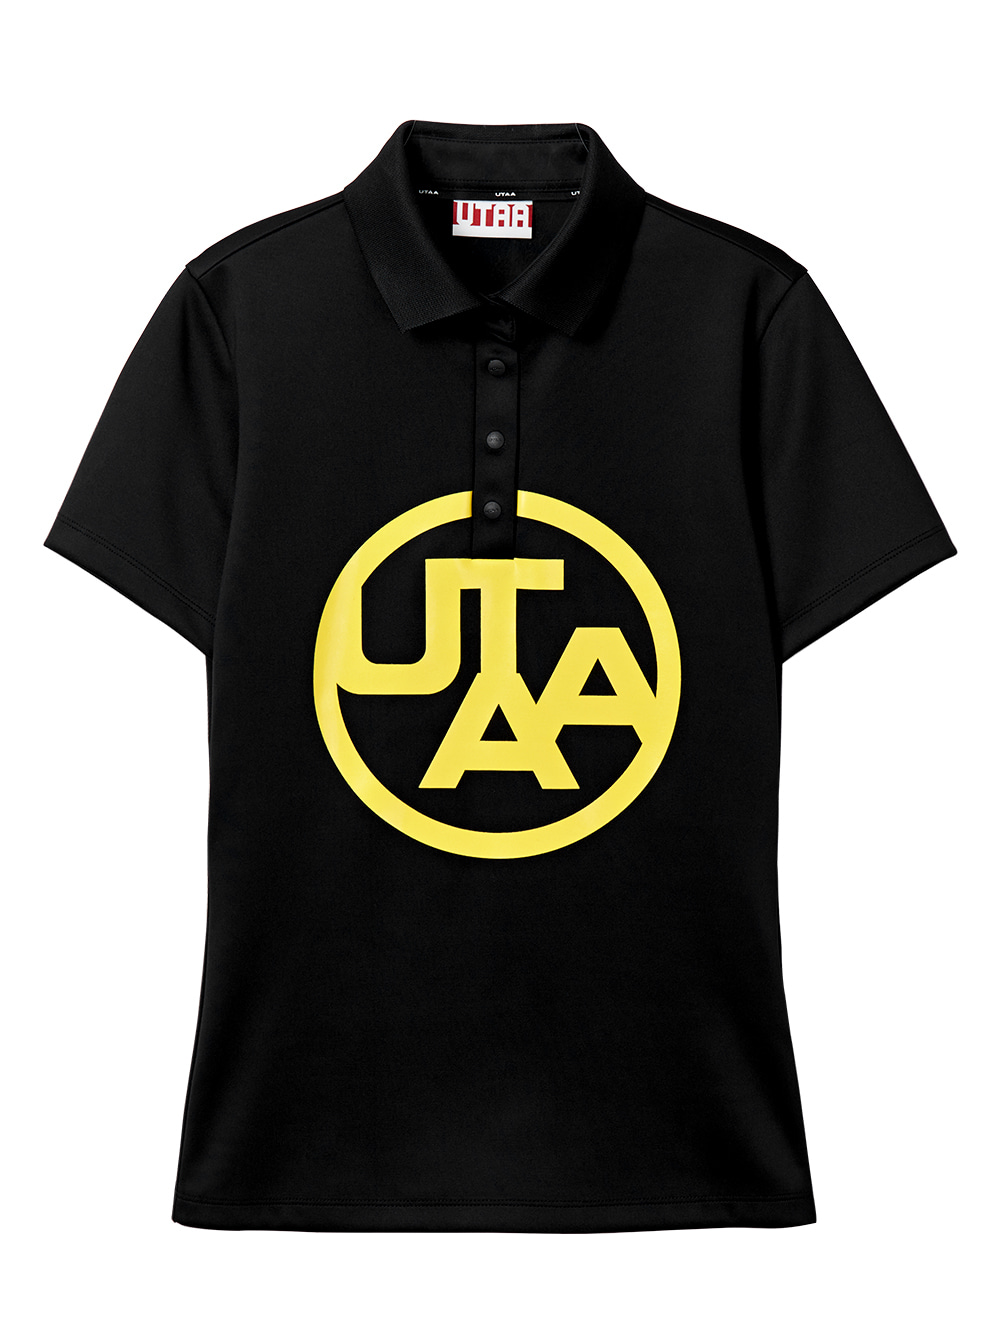 UTAA Emblem PK T-shirts : Womens  (UA0TSF453BK)